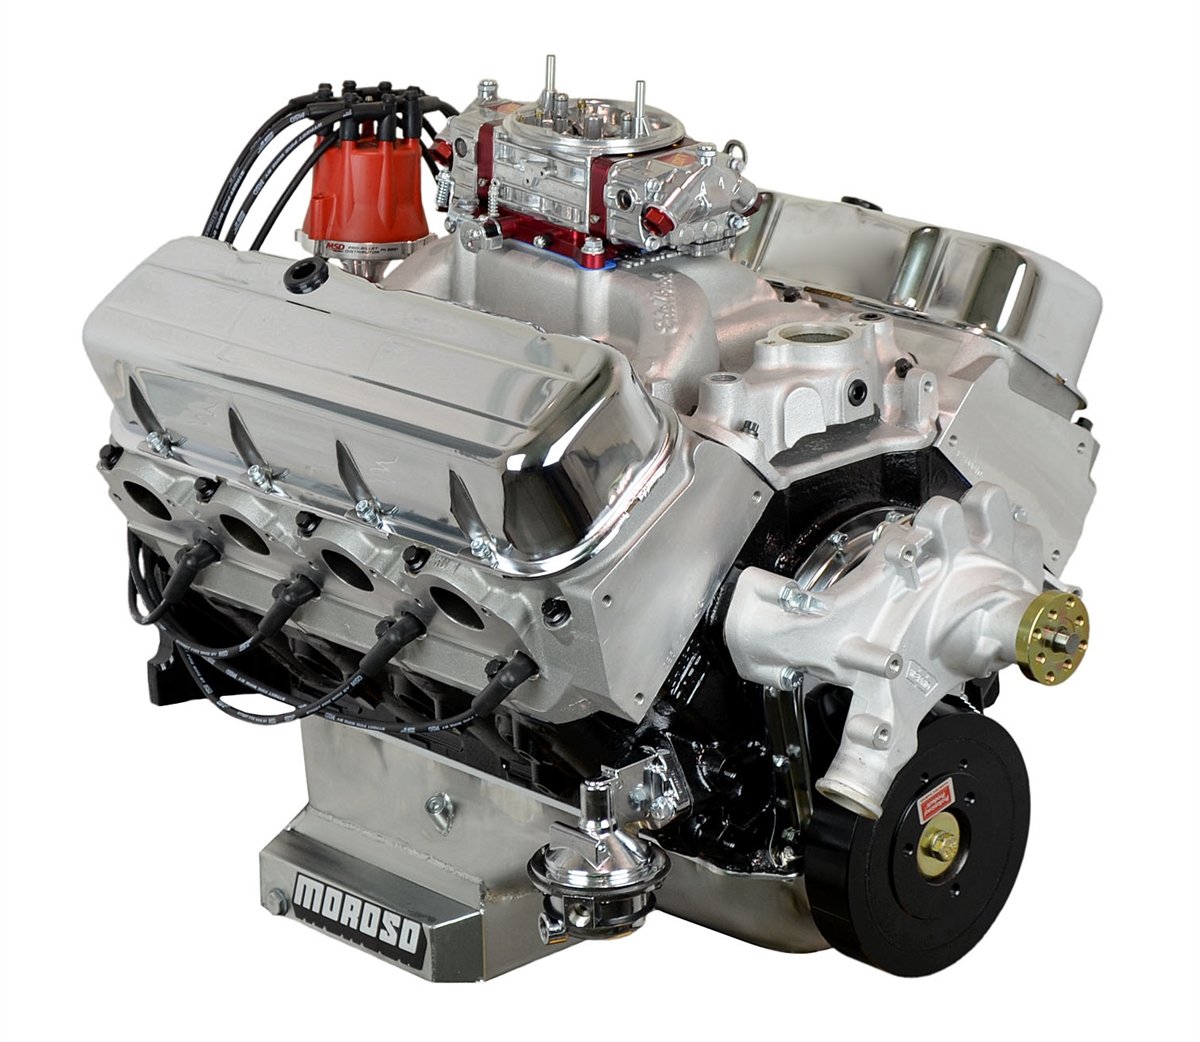 HP631PC High Performance Crate Engine Big Block Chevy 496ci / 600HP / 605TQ